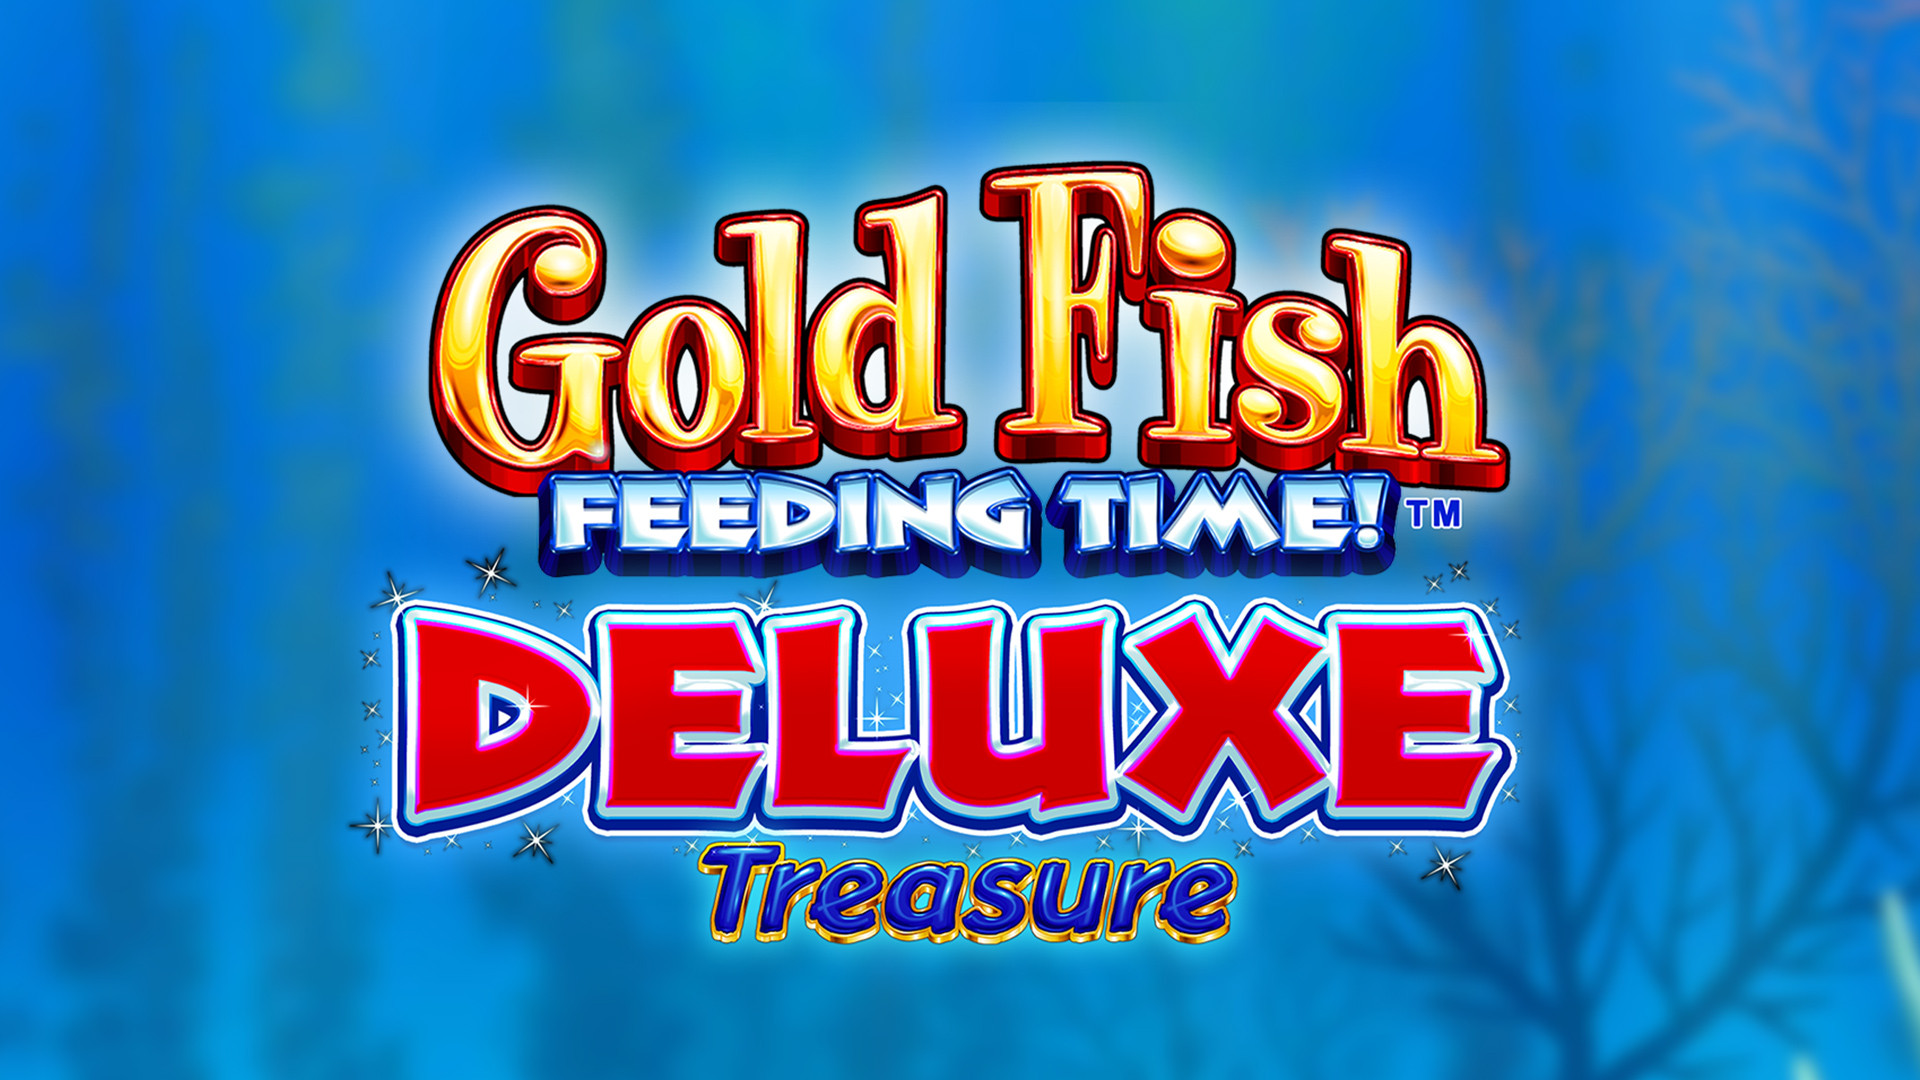 Gold Fish Feeding Time! Deluxe Treasure